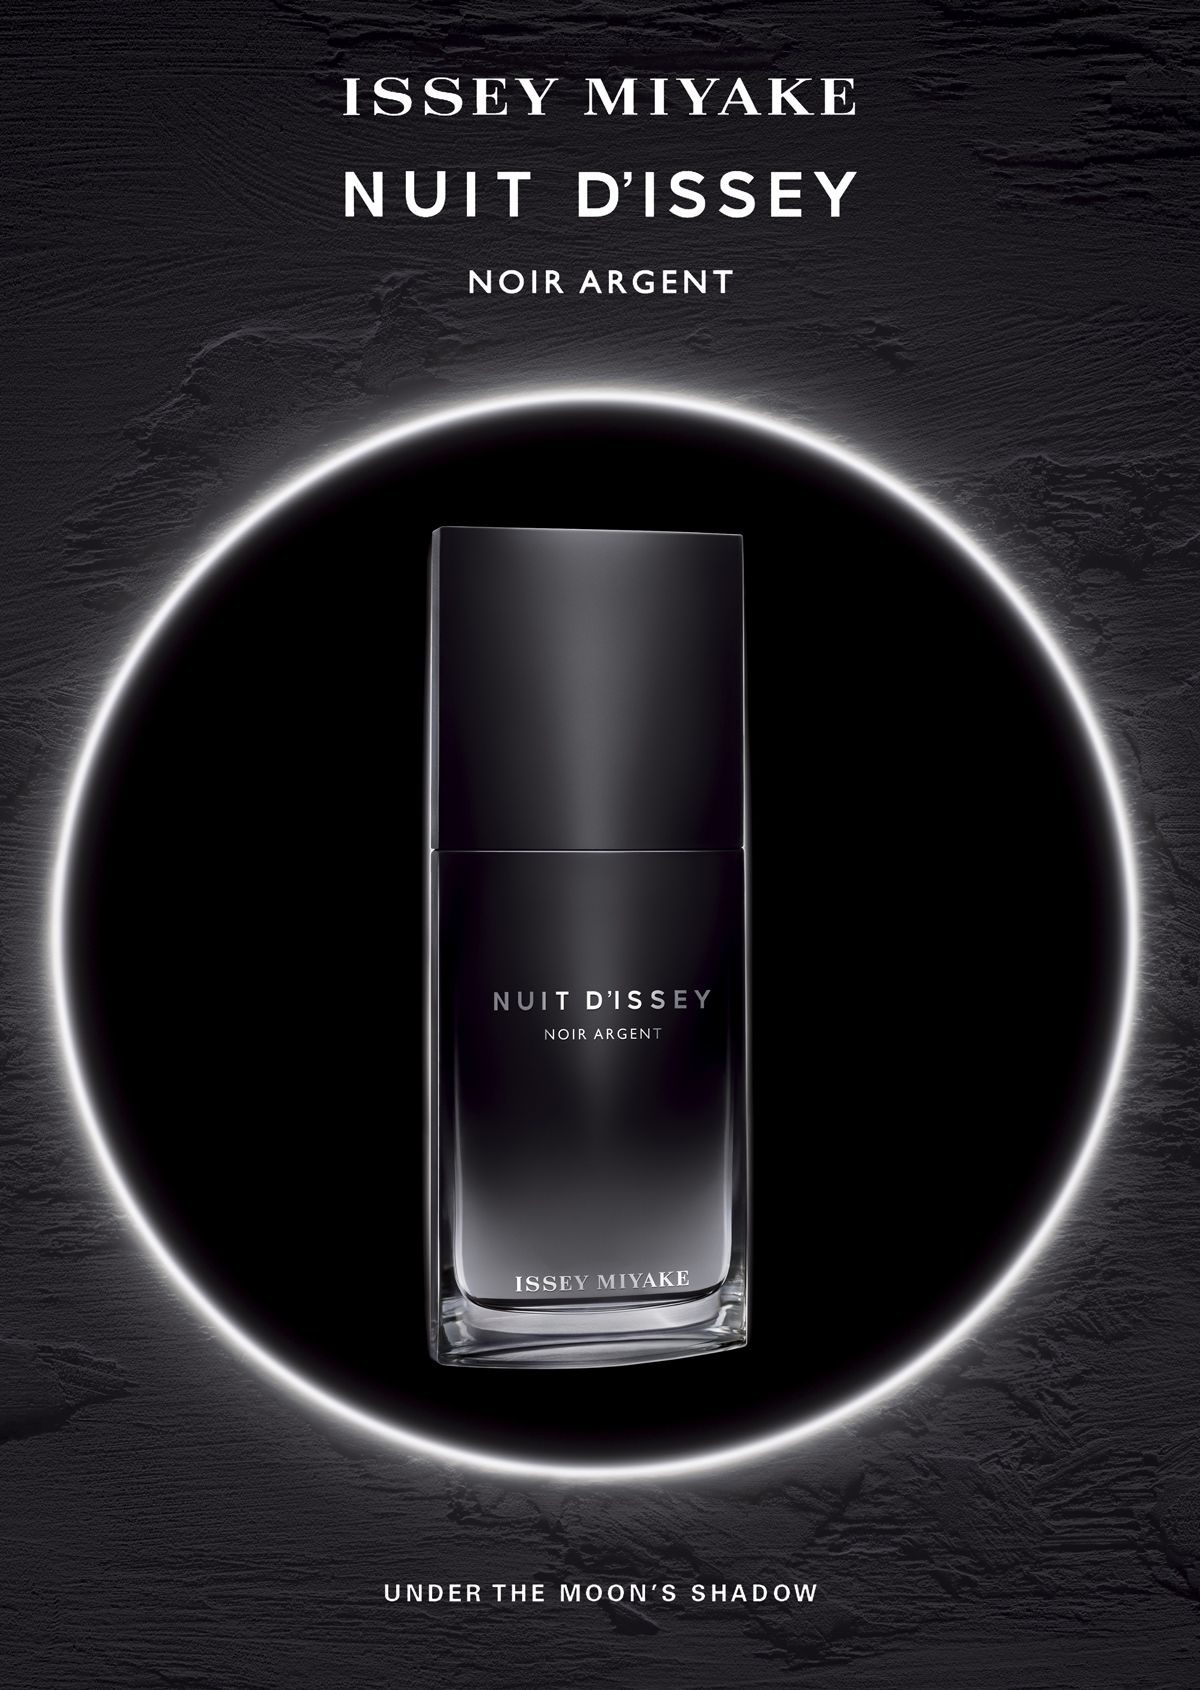 Nuit D’Issey Noir Argent Issey Miyake cologne - a fragrance for men 2018